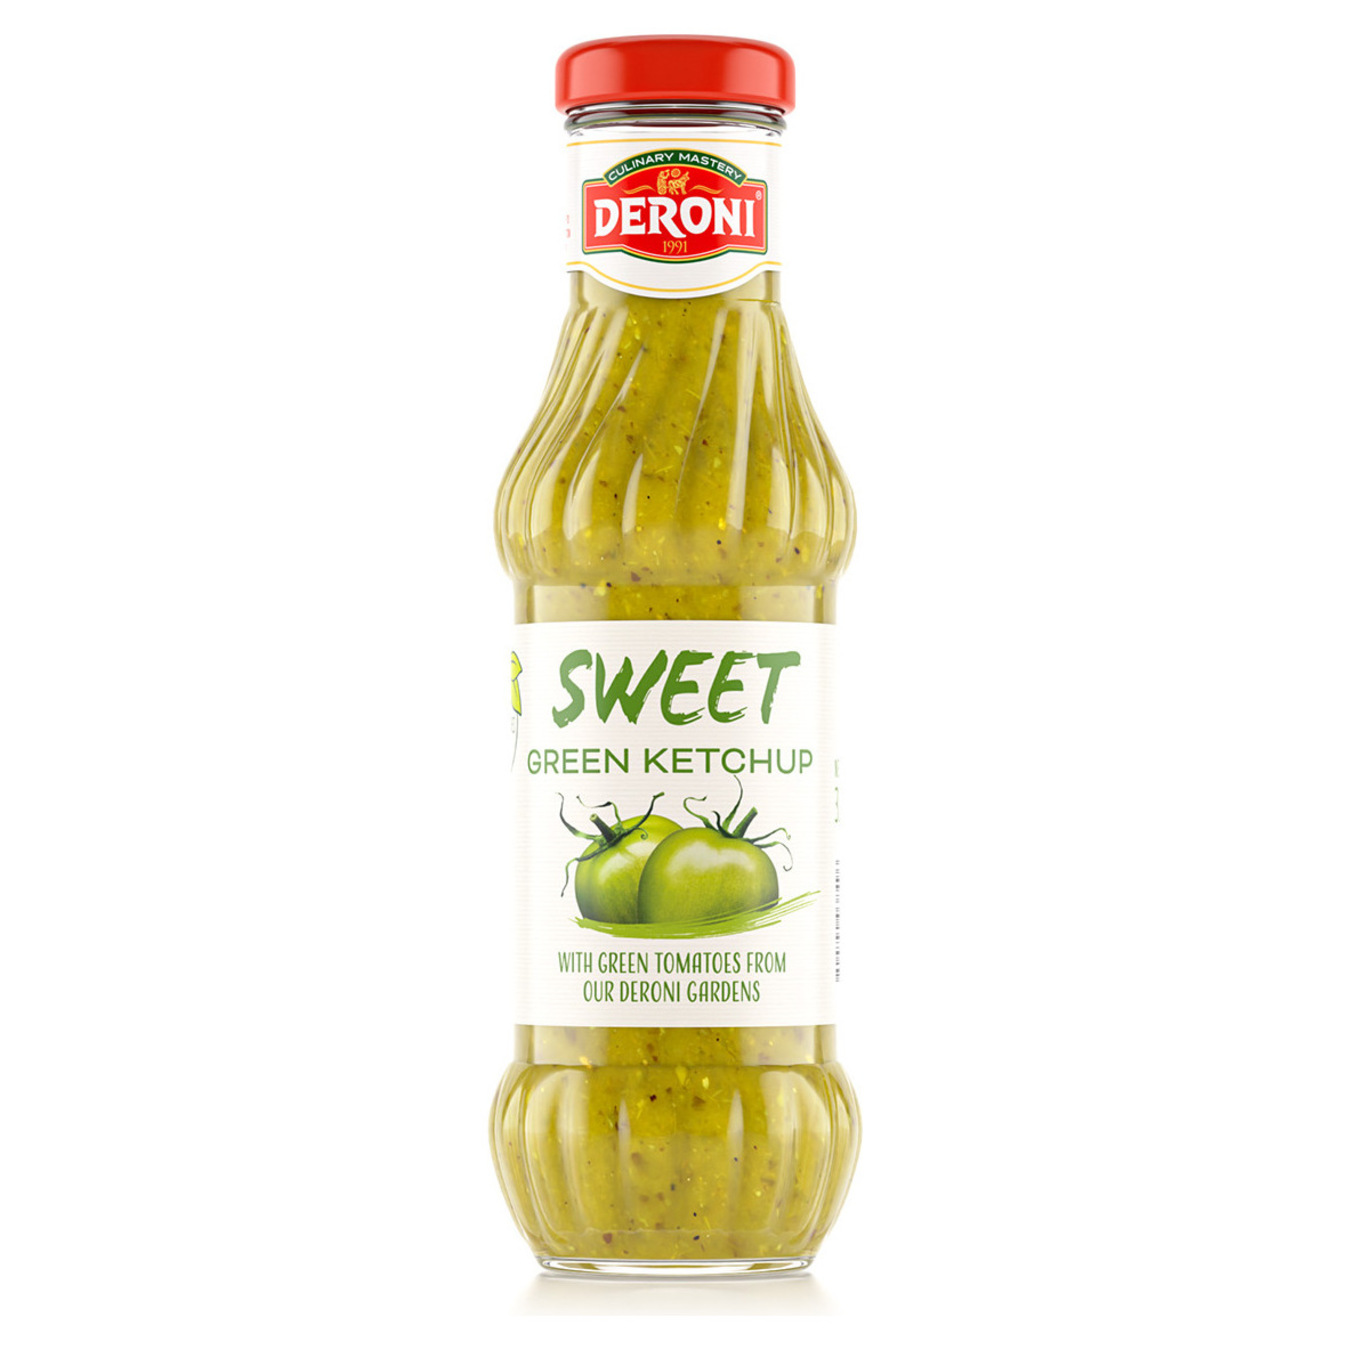 Ketchup Deroni sweet green 320g